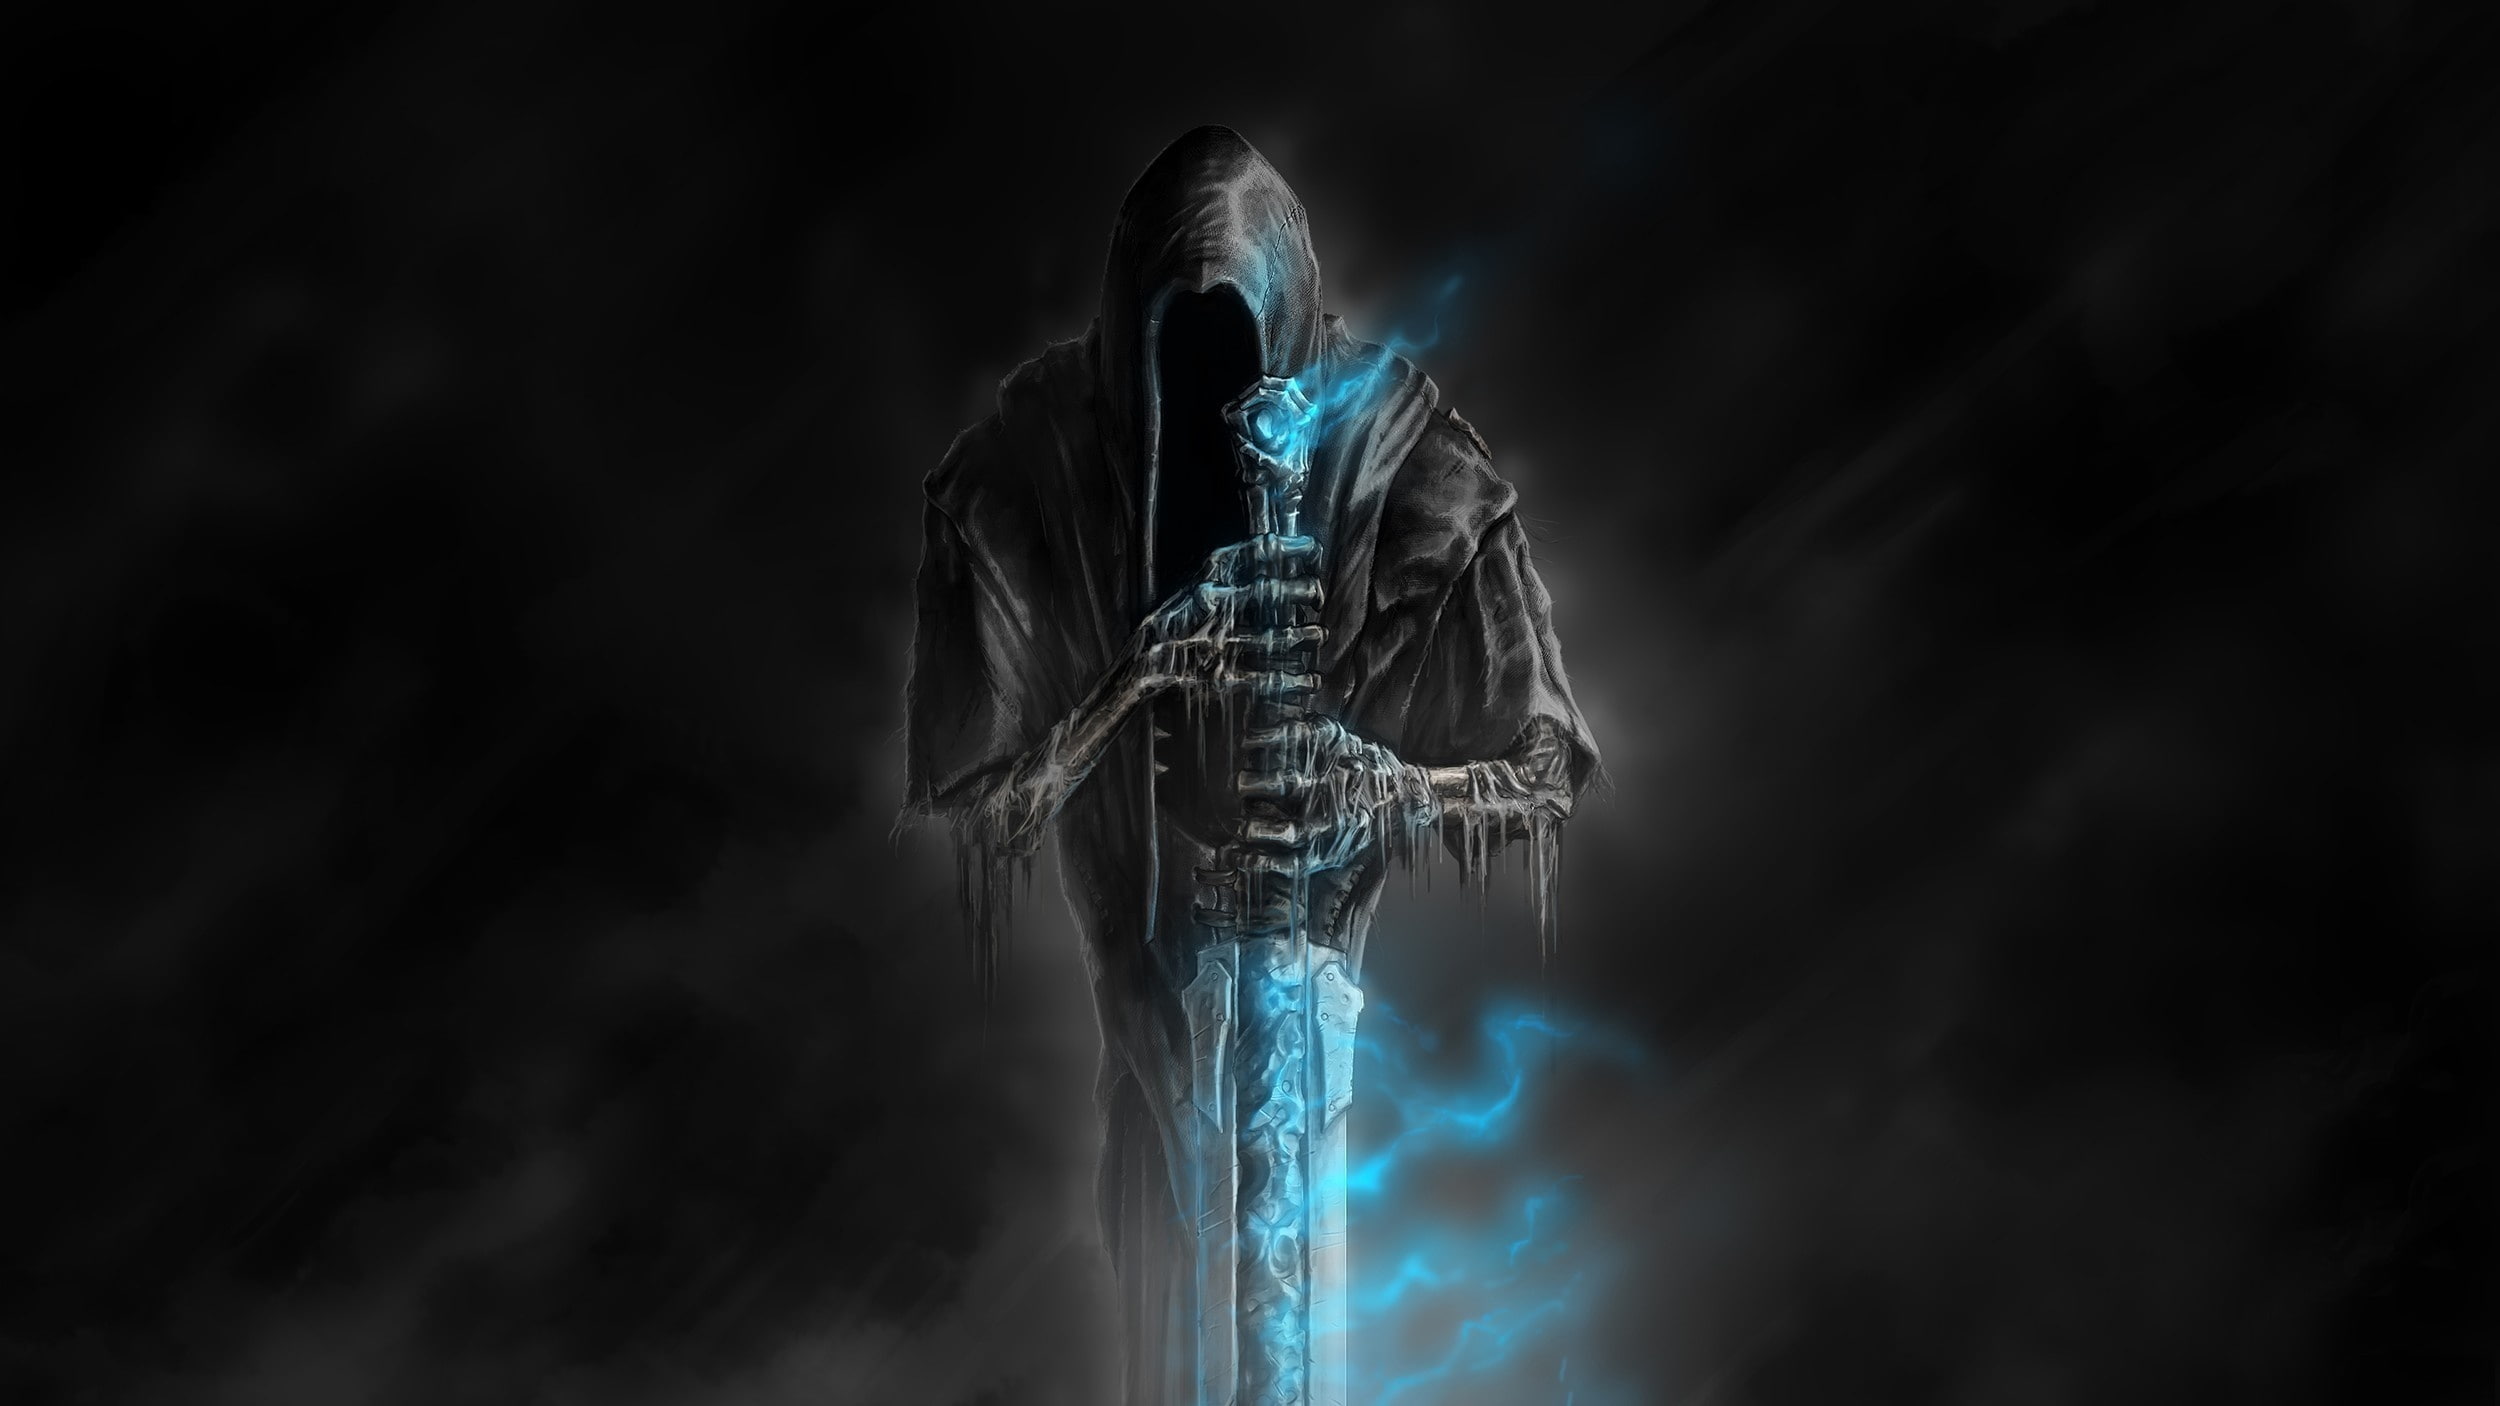 Grim Reaper wallpaper, death, darkness, bones, horror, art, blue flame